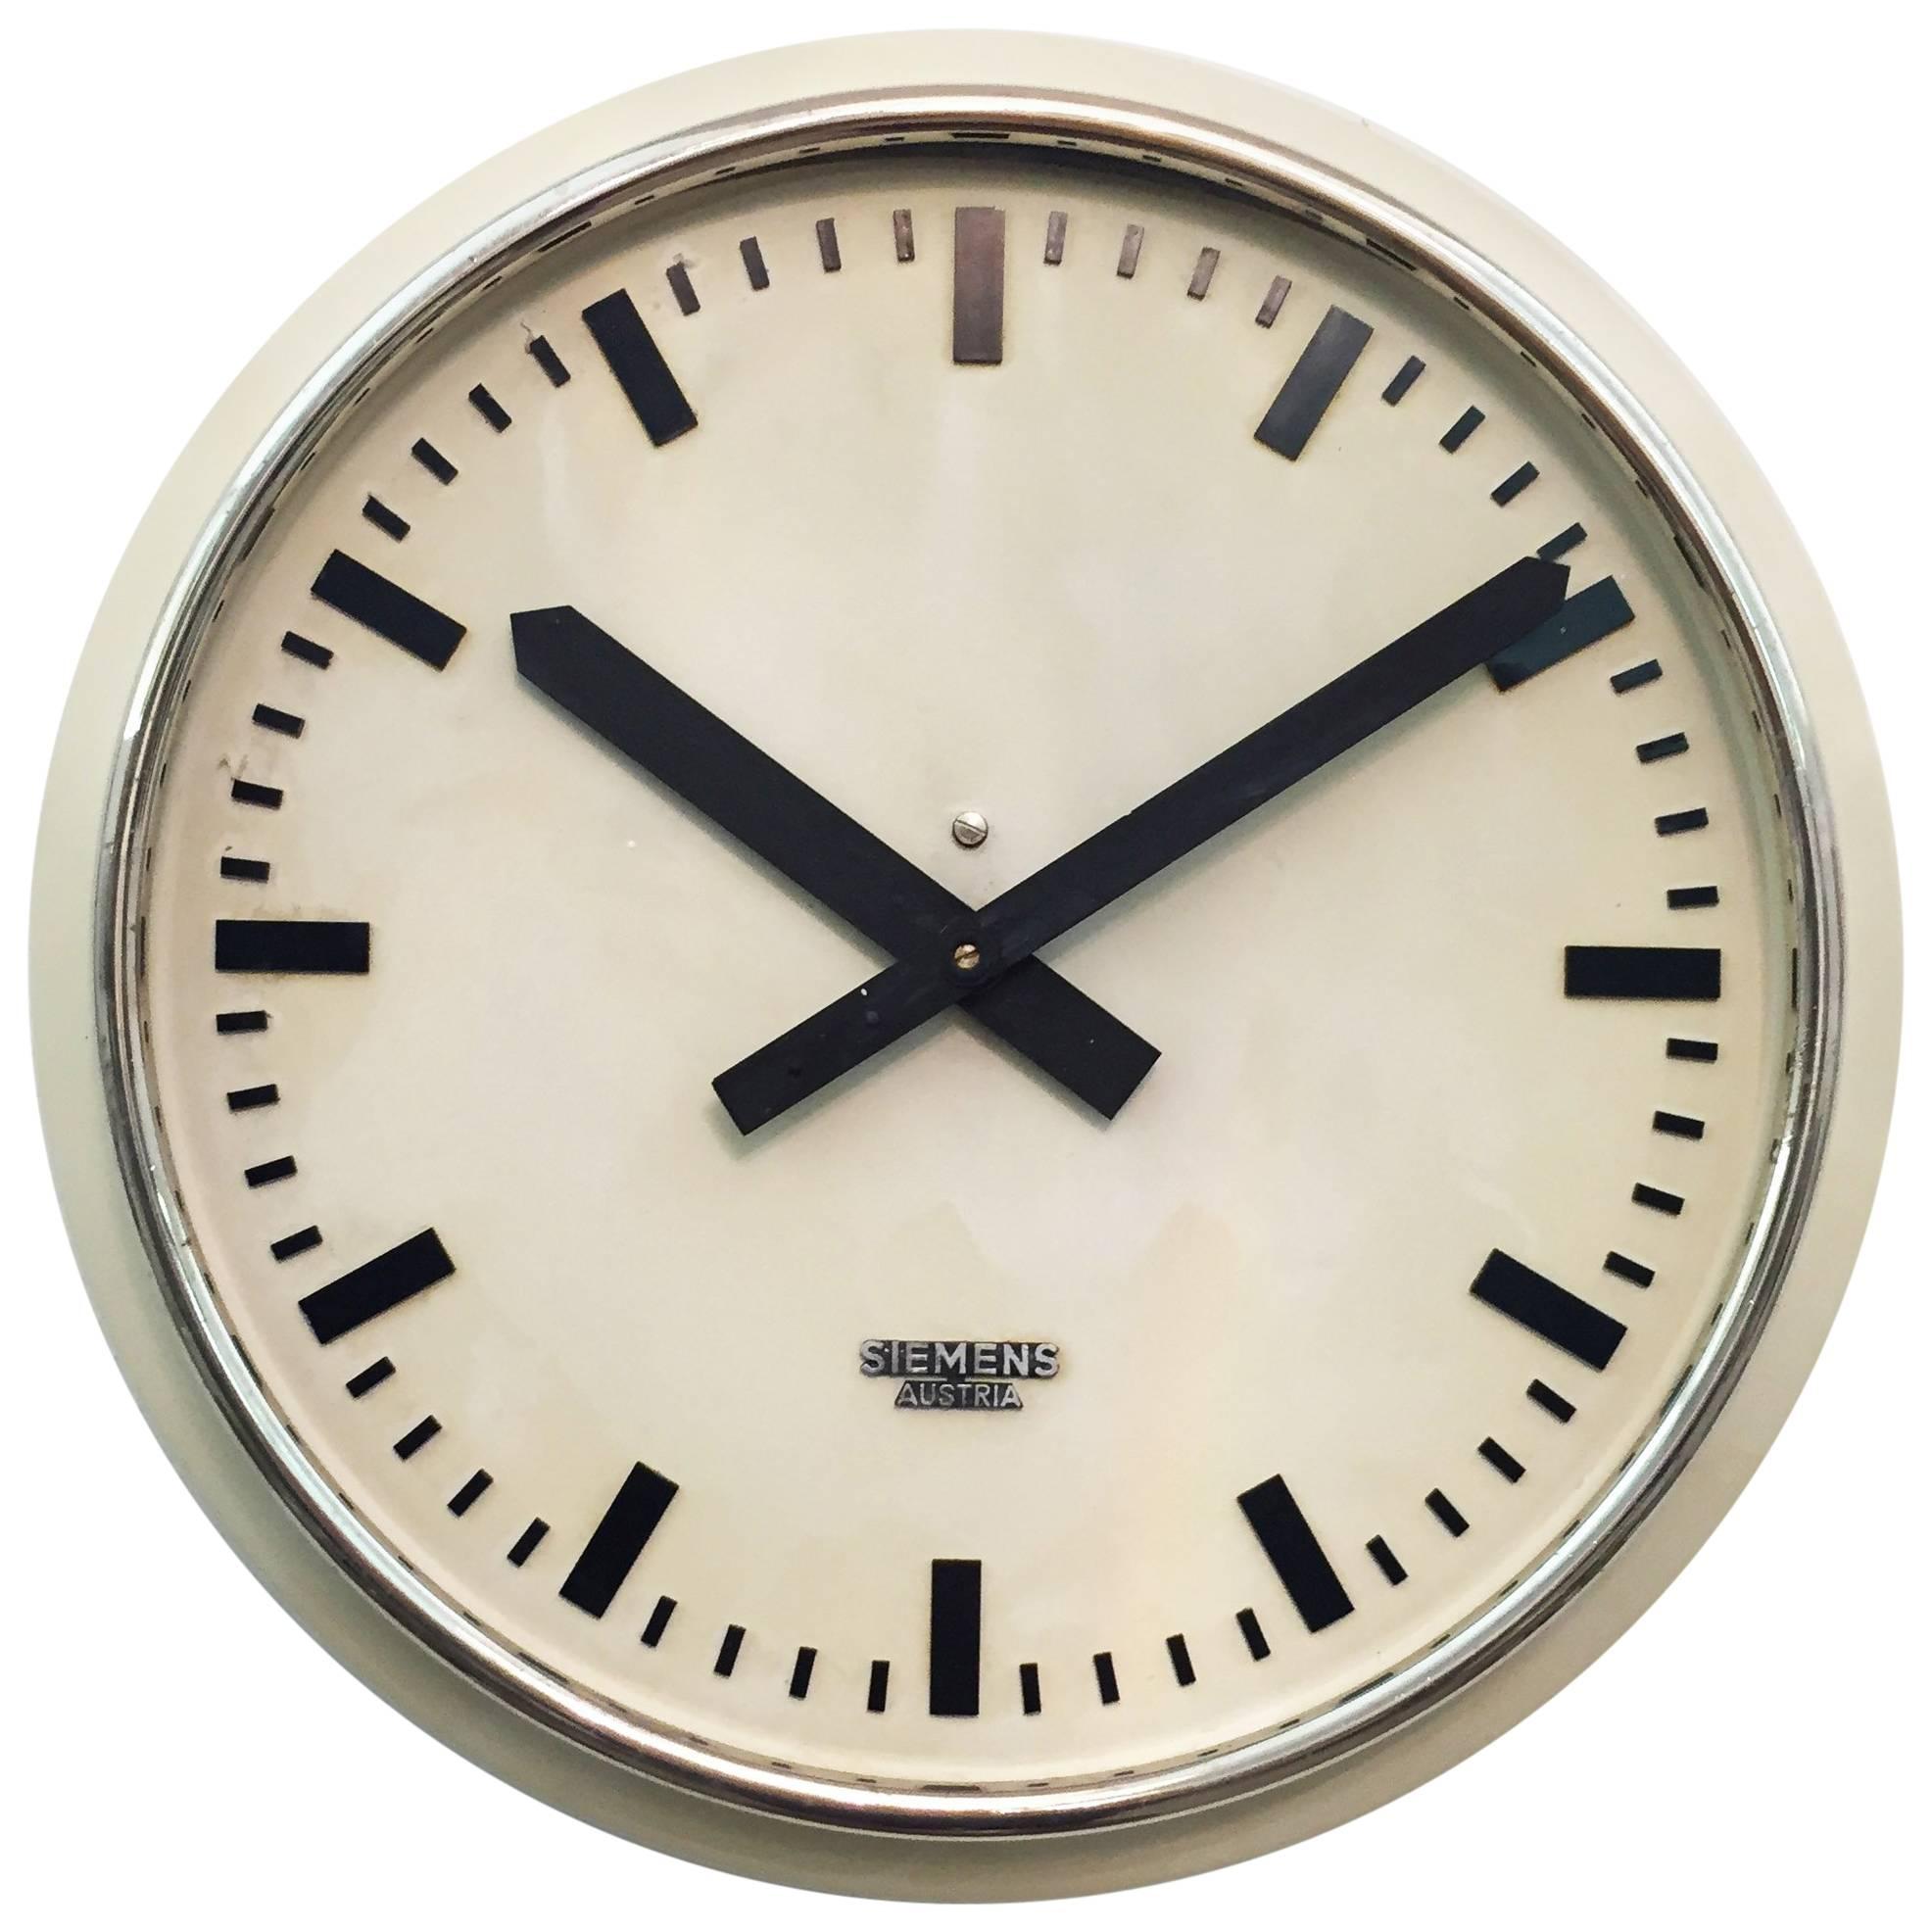 Siemens Austria Factory or Workshop Wall Clock  For Sale